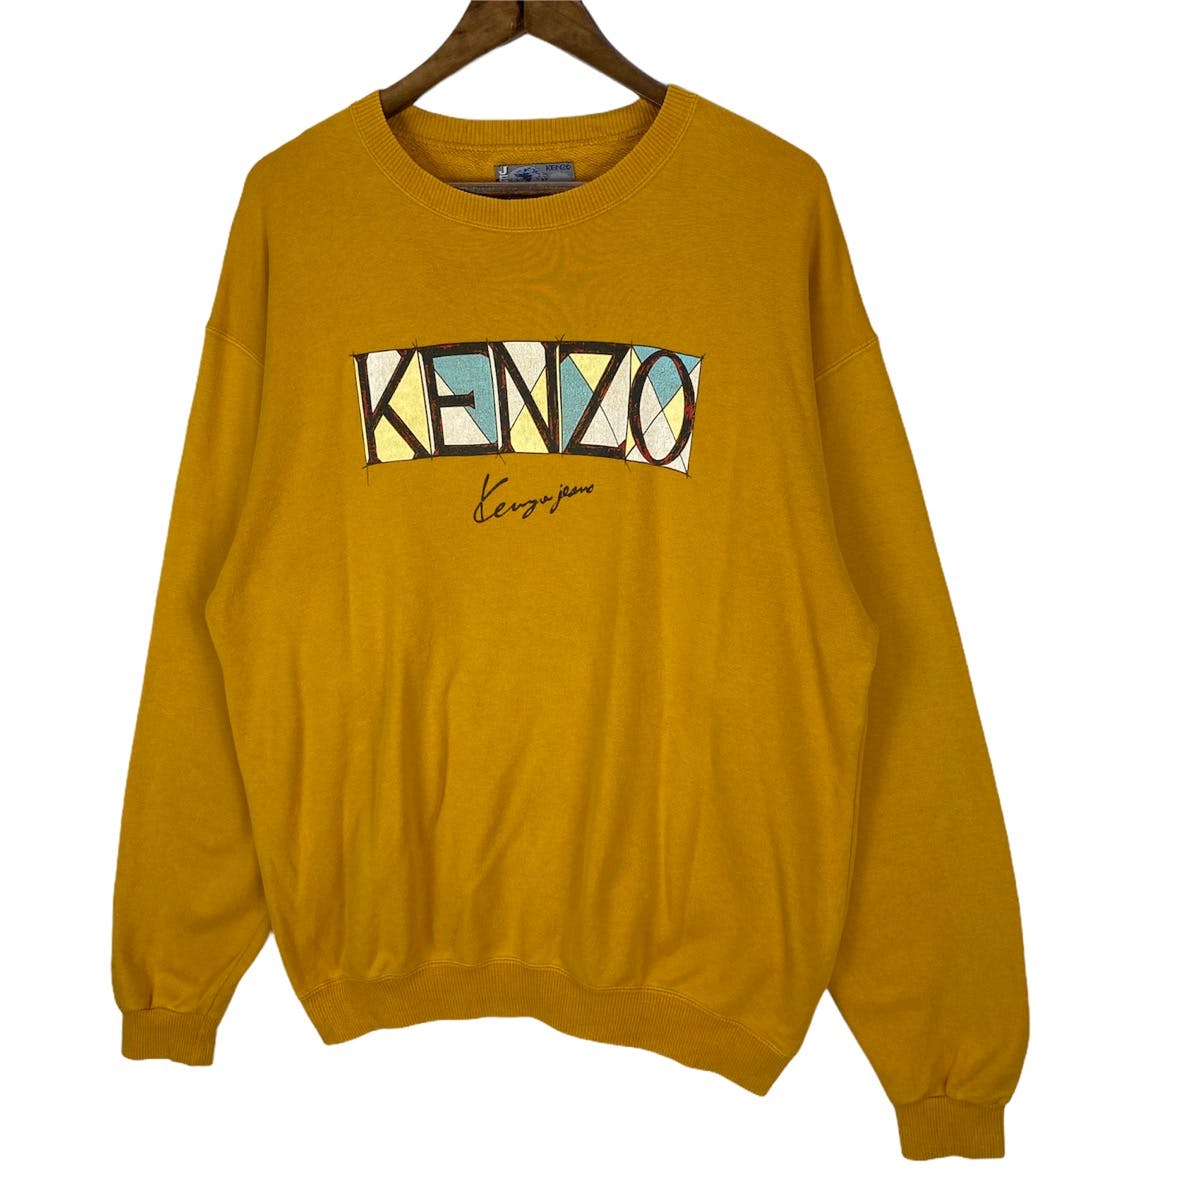 Vintage Kenzo Jeans Sweatshirt Crewneck - 4